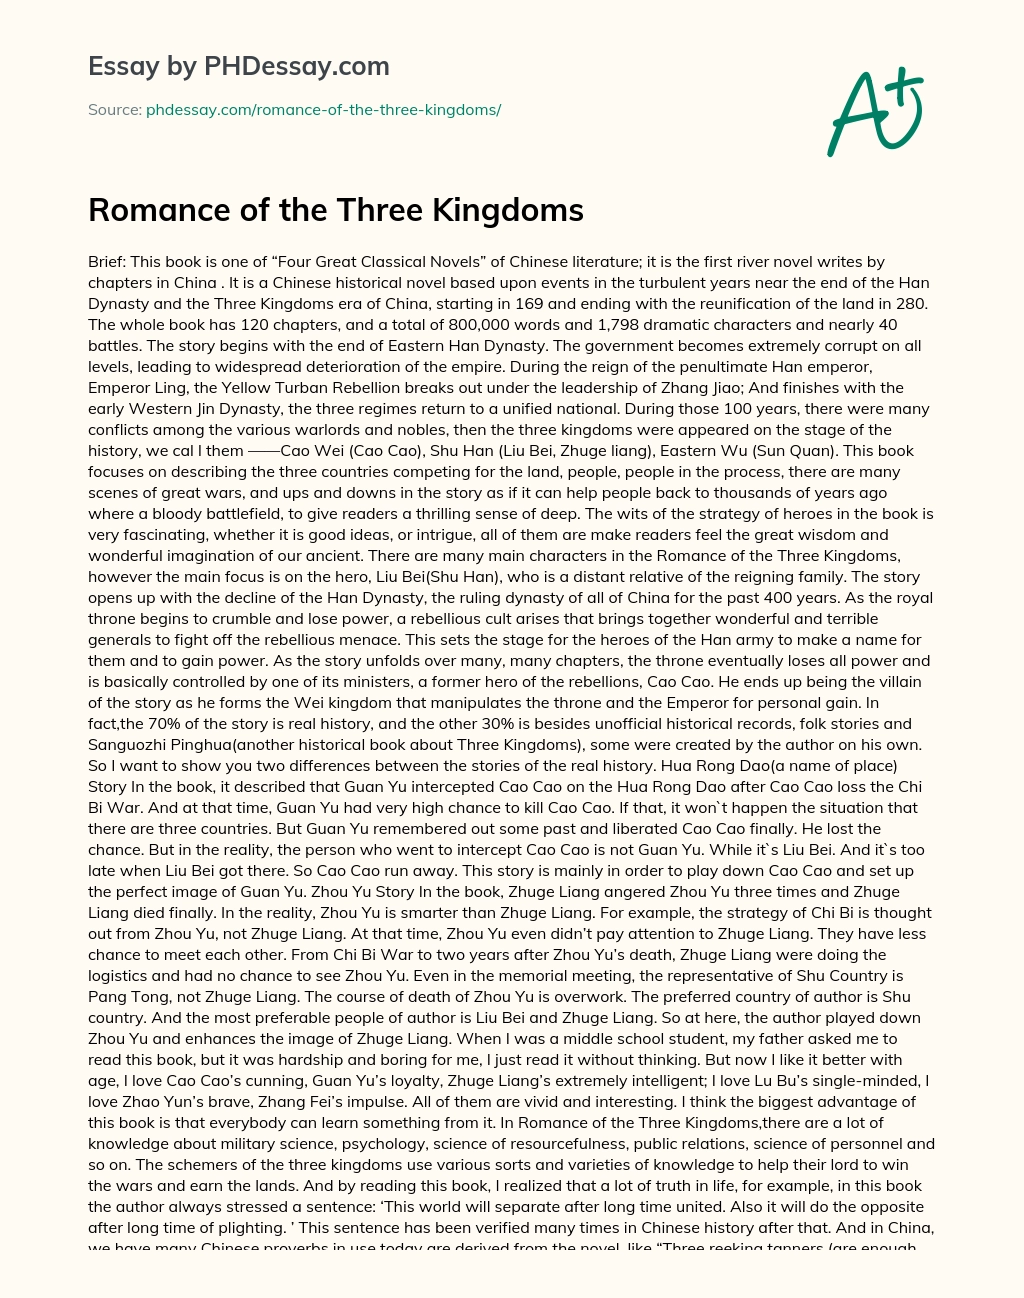 Romance of the Three Kingdoms essay